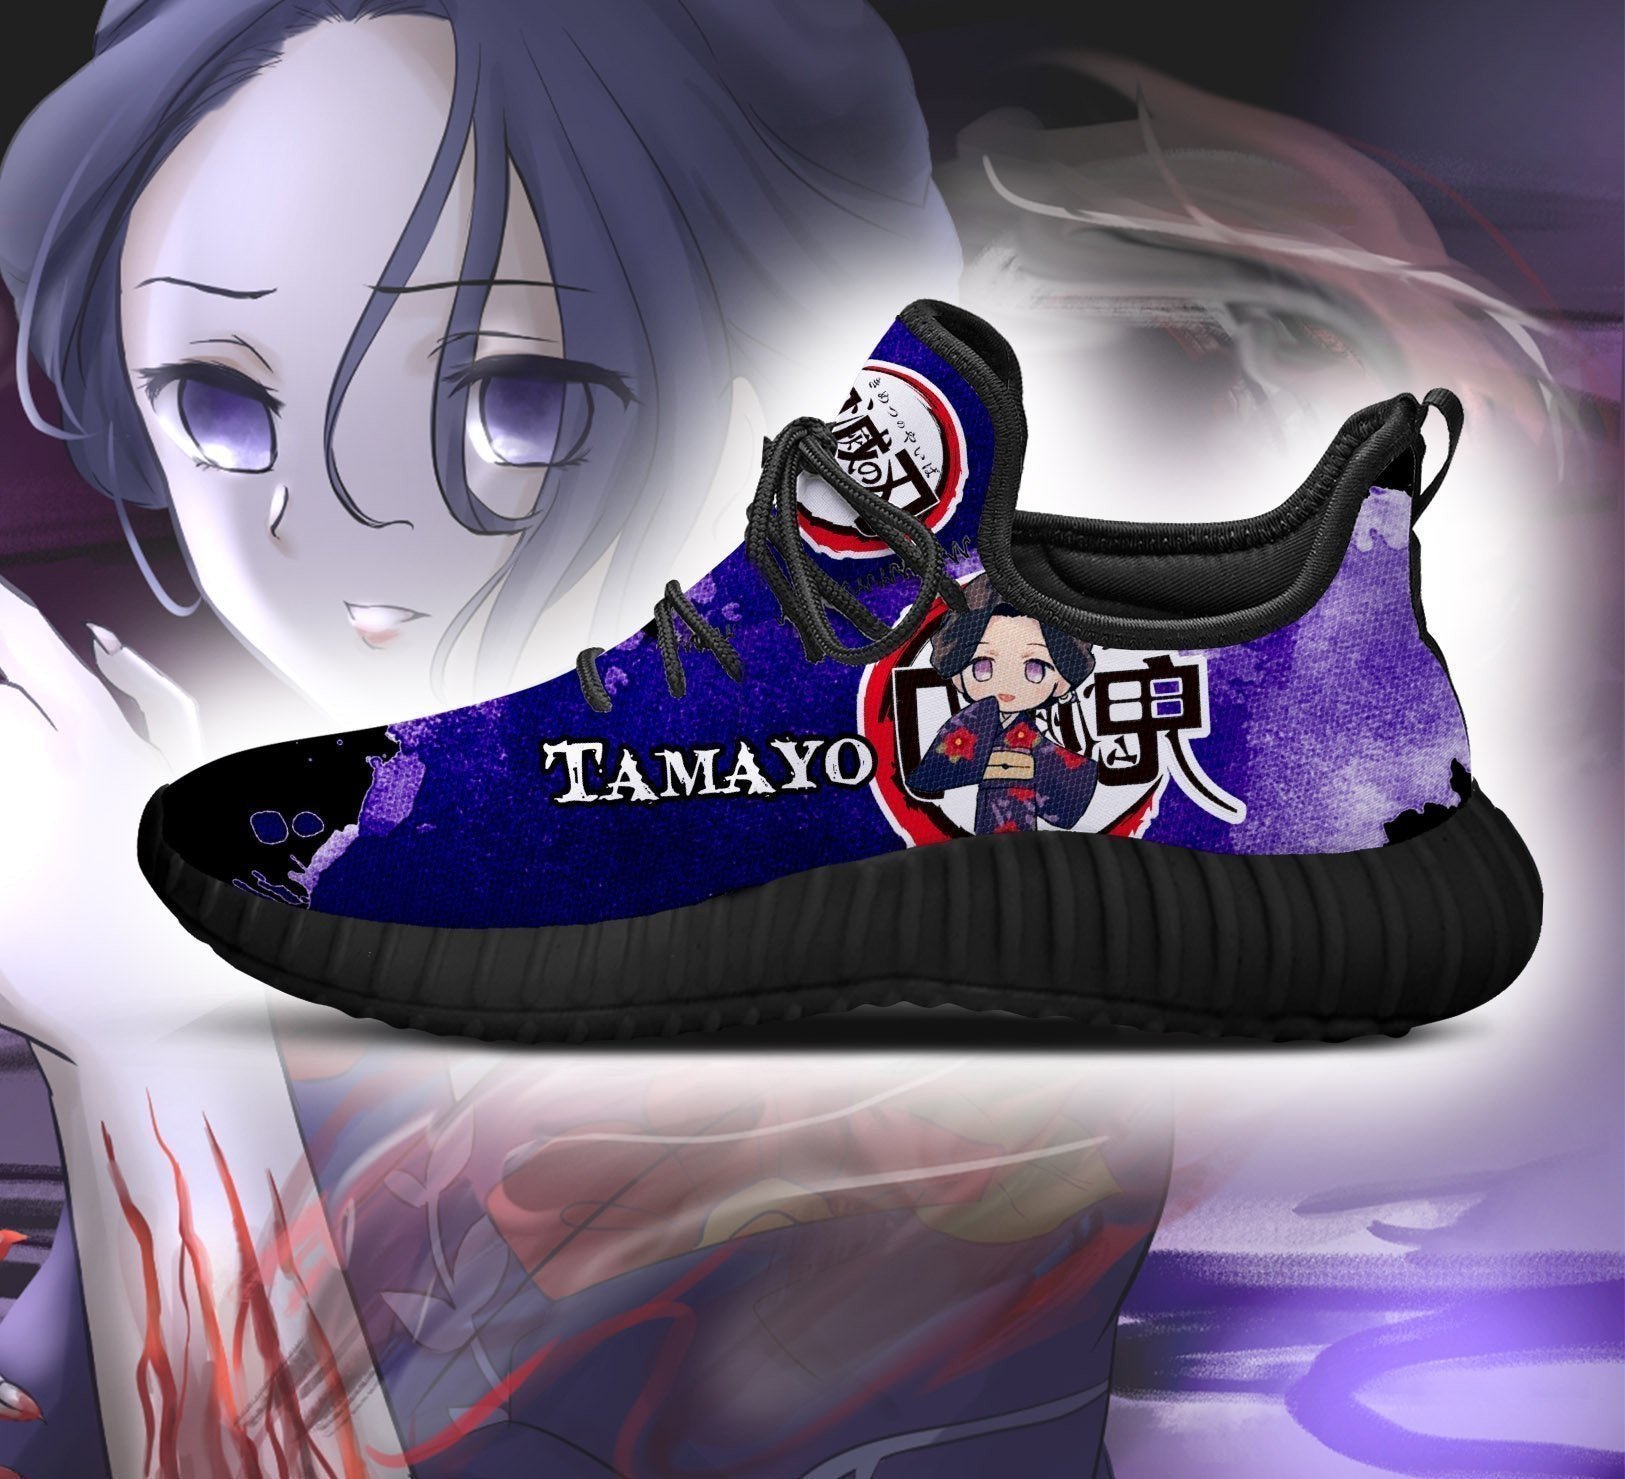 Anime Demon Slayer Tamyo Reze Shoes 1 2 3